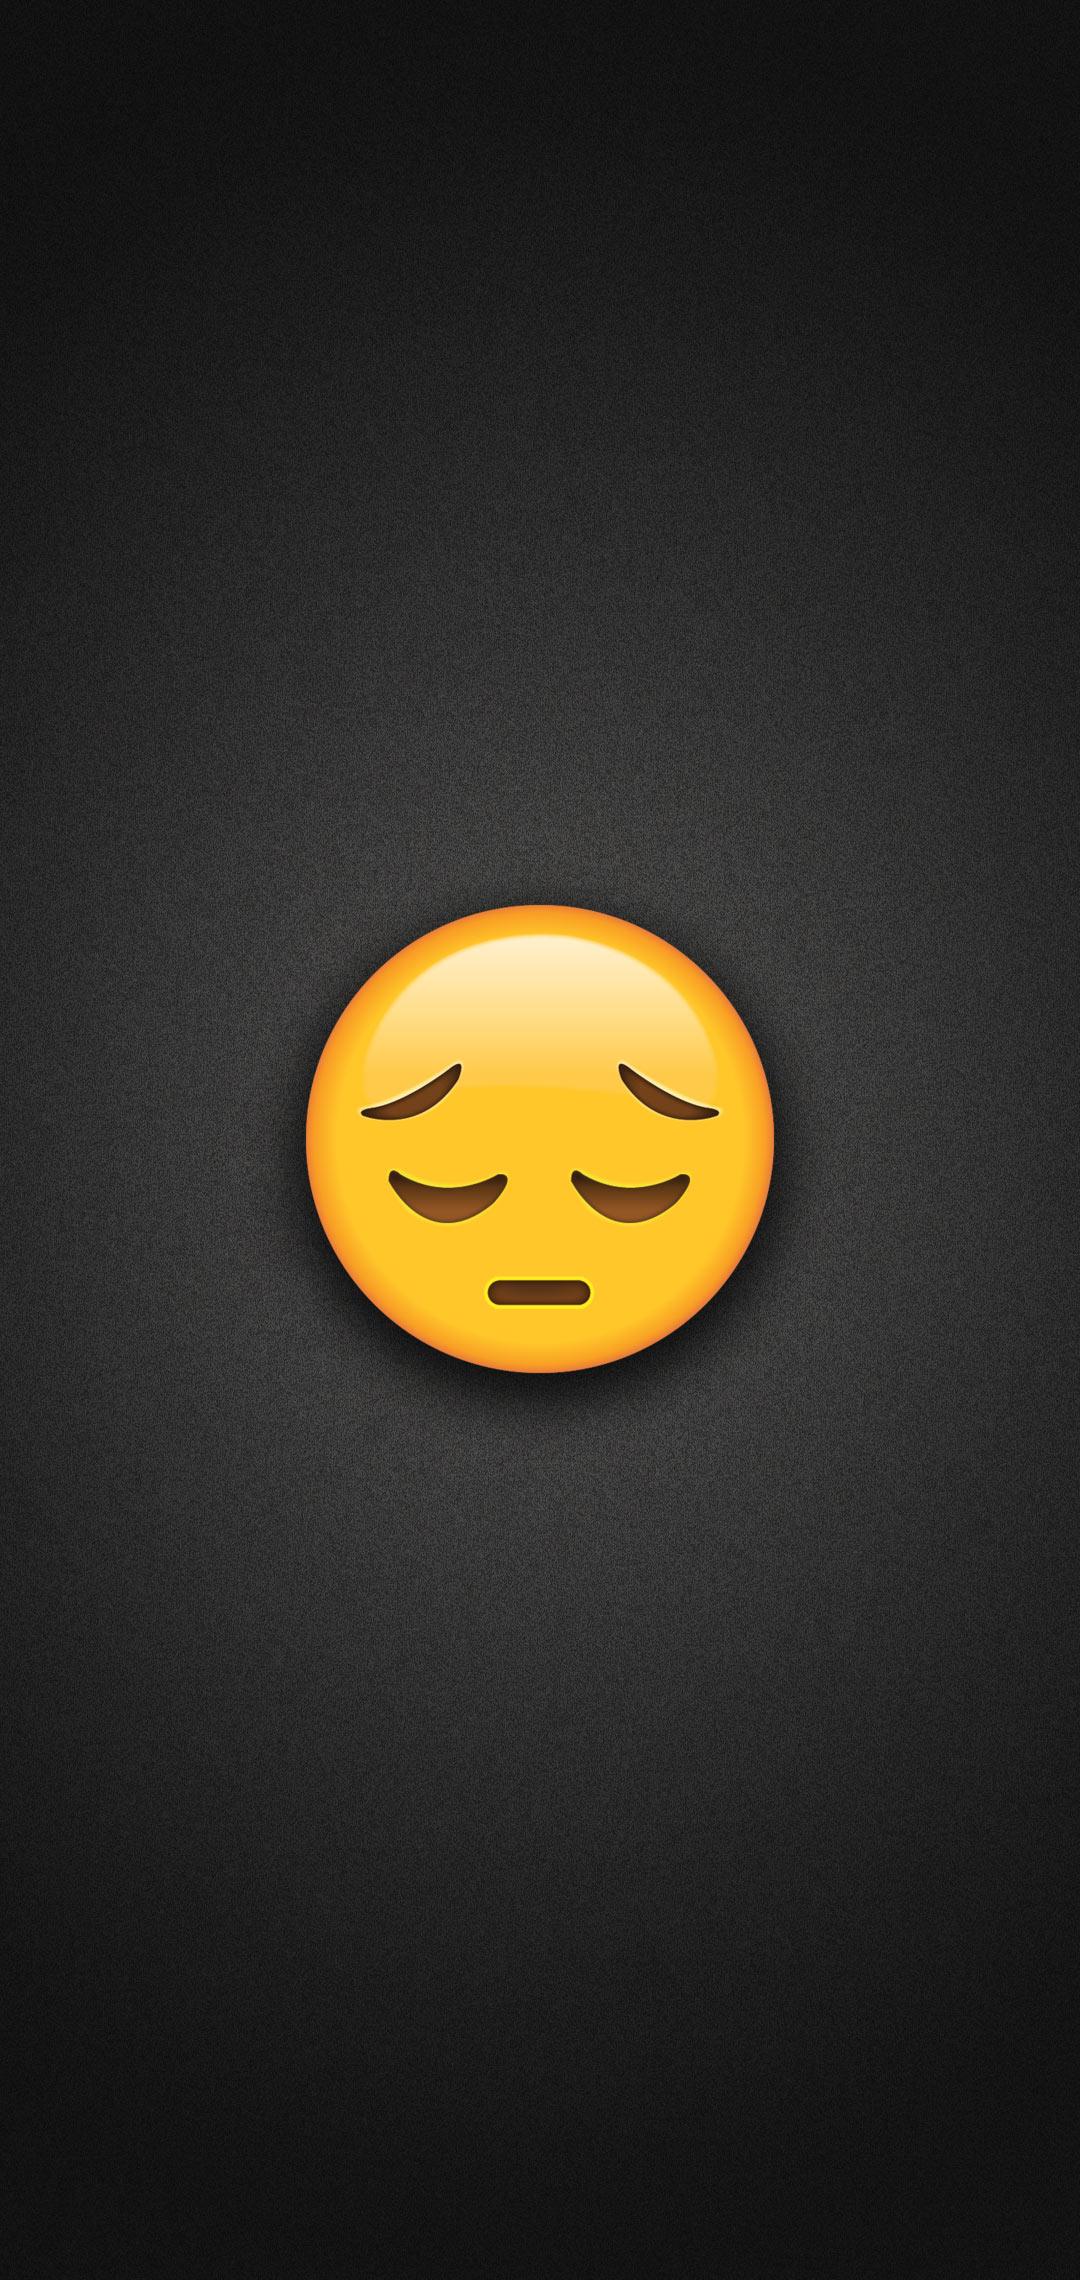 1080x2280 Sad Face Emoji Phone Wallpaper